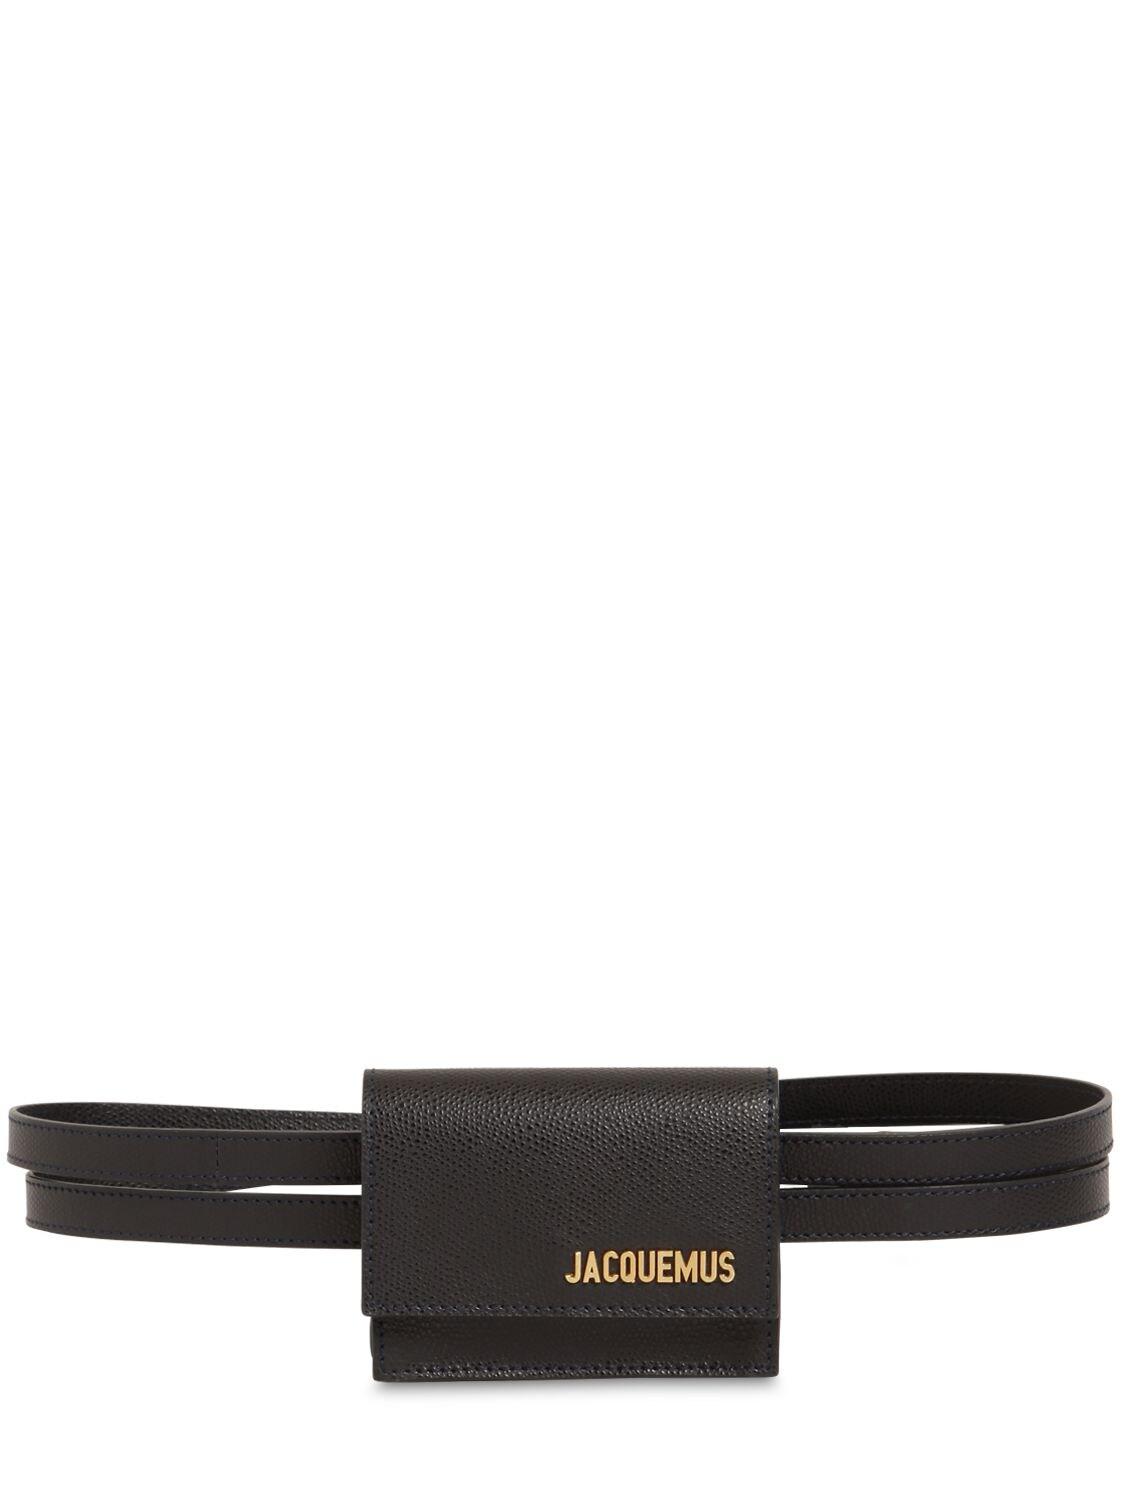 Jacquemus La Ceinture Bello Leather Belt Bag in Black | Lyst